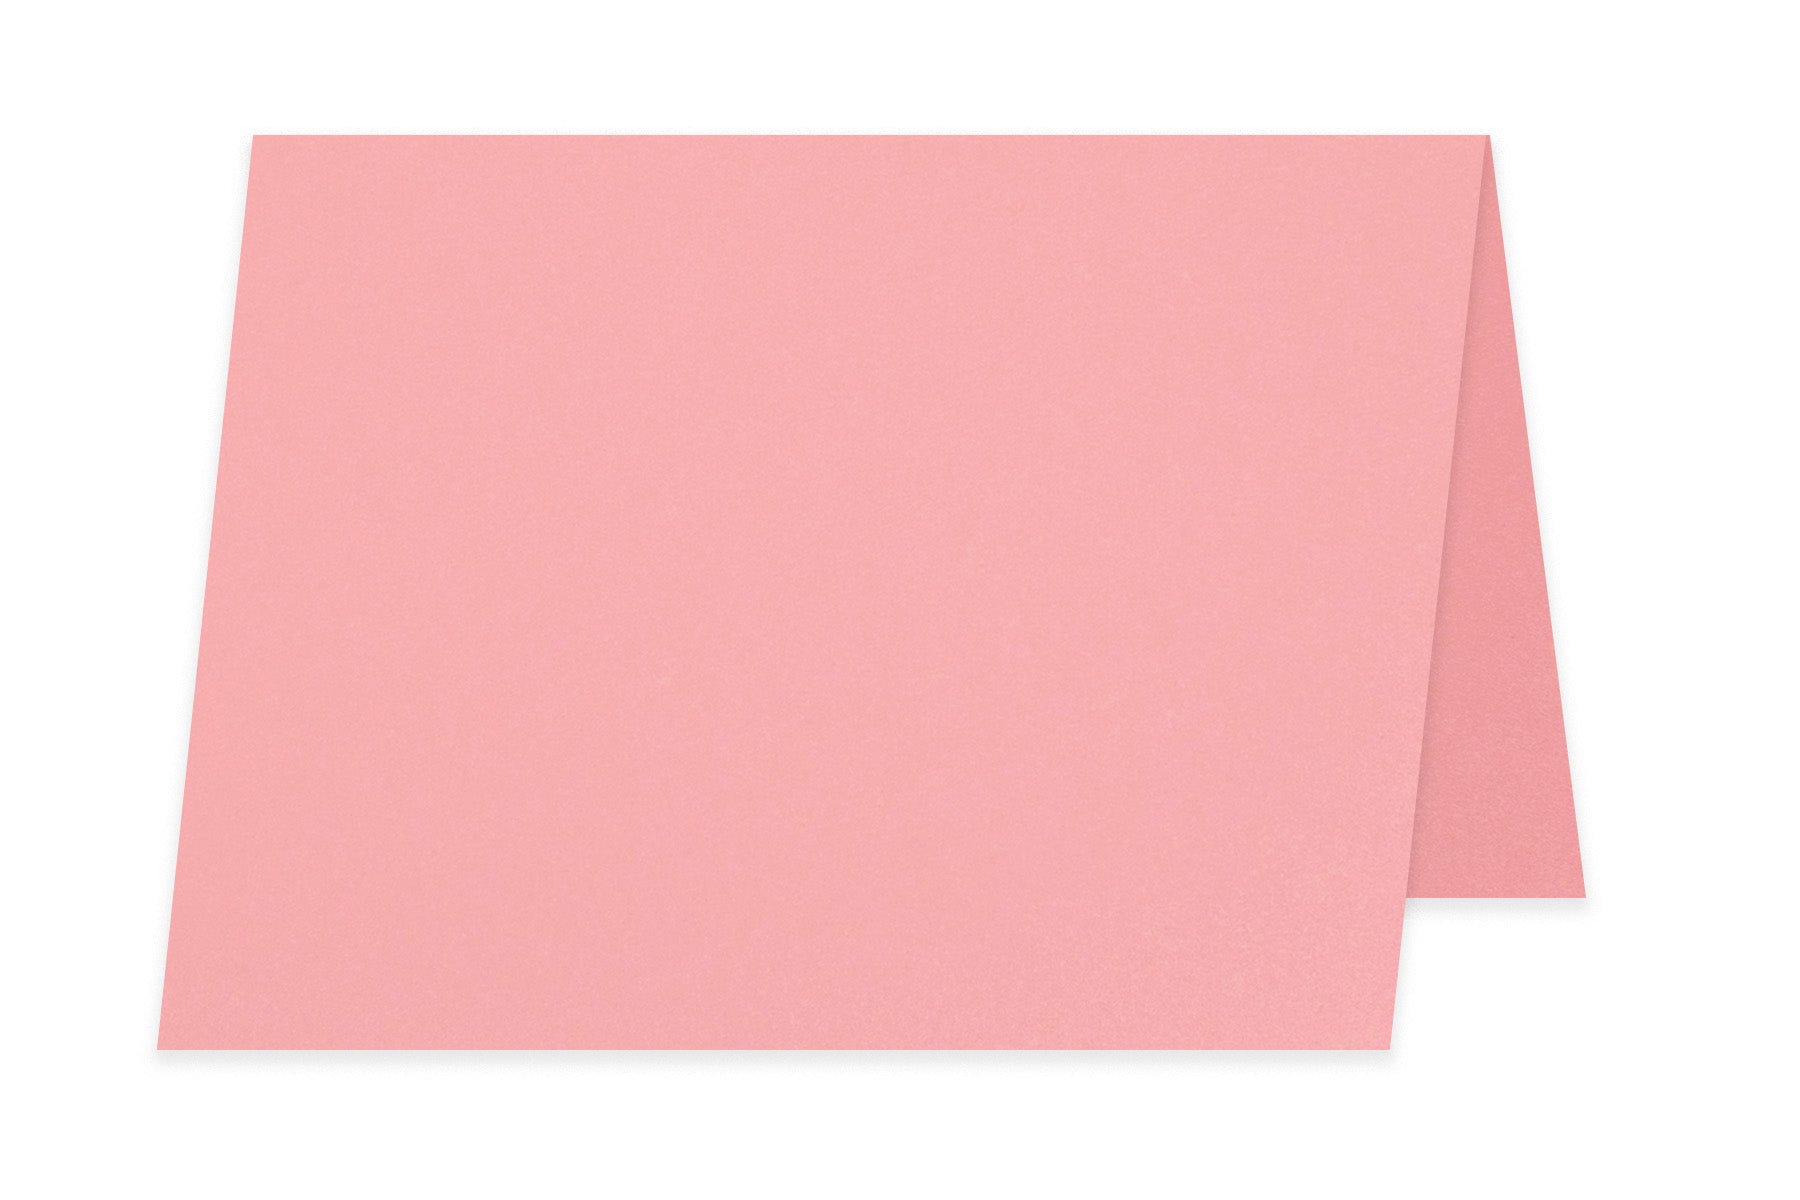 Cotton Letterpress Envelopes for 5x7 invitations and announcements -  CutCardStock